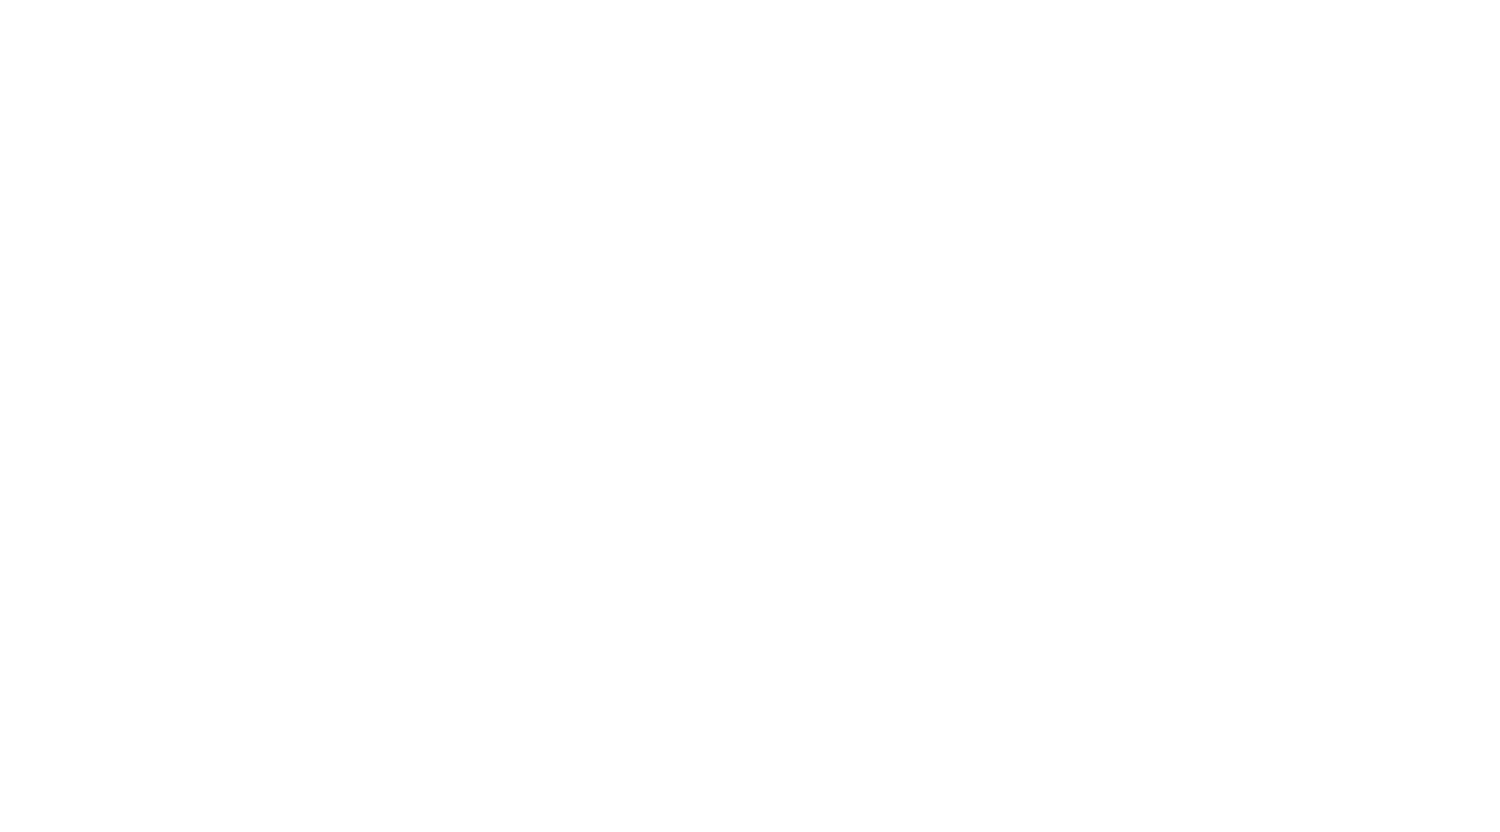 Susannah Constantine